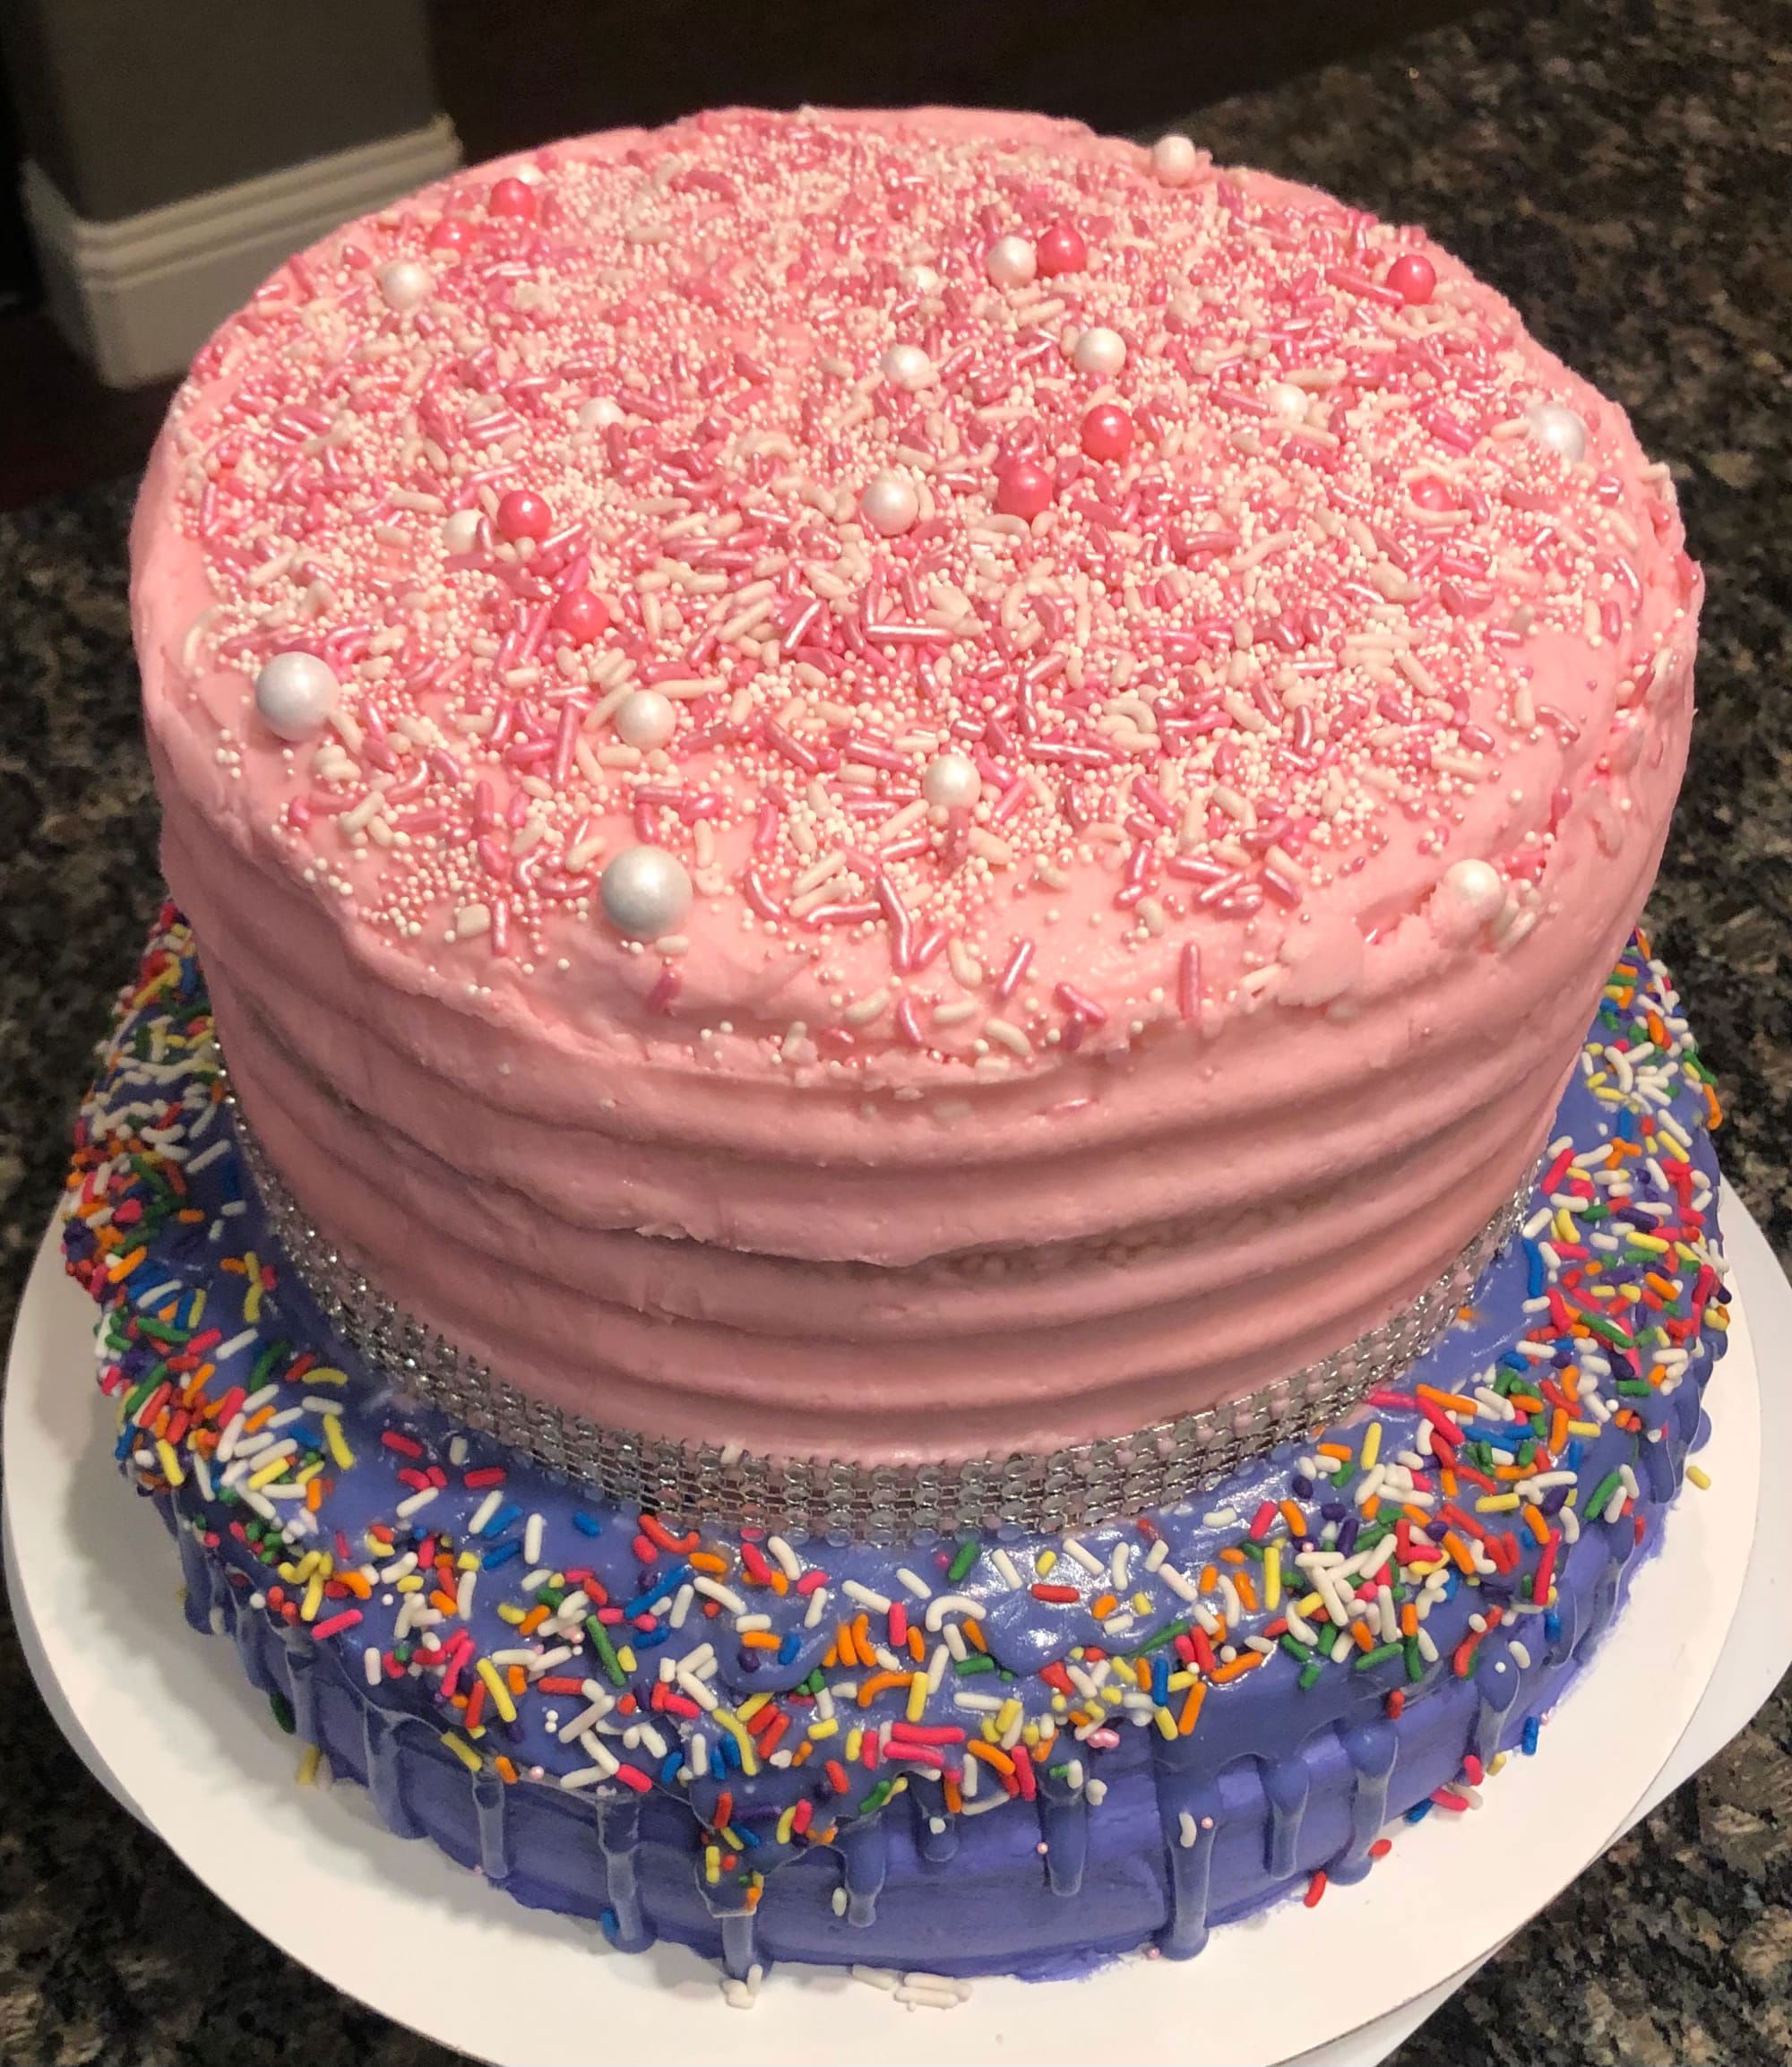 2 Tier, 5 Layer Strawberry & Vanilla Birthday Cake With Pink & Purple Vanilla Buttercream Frosting